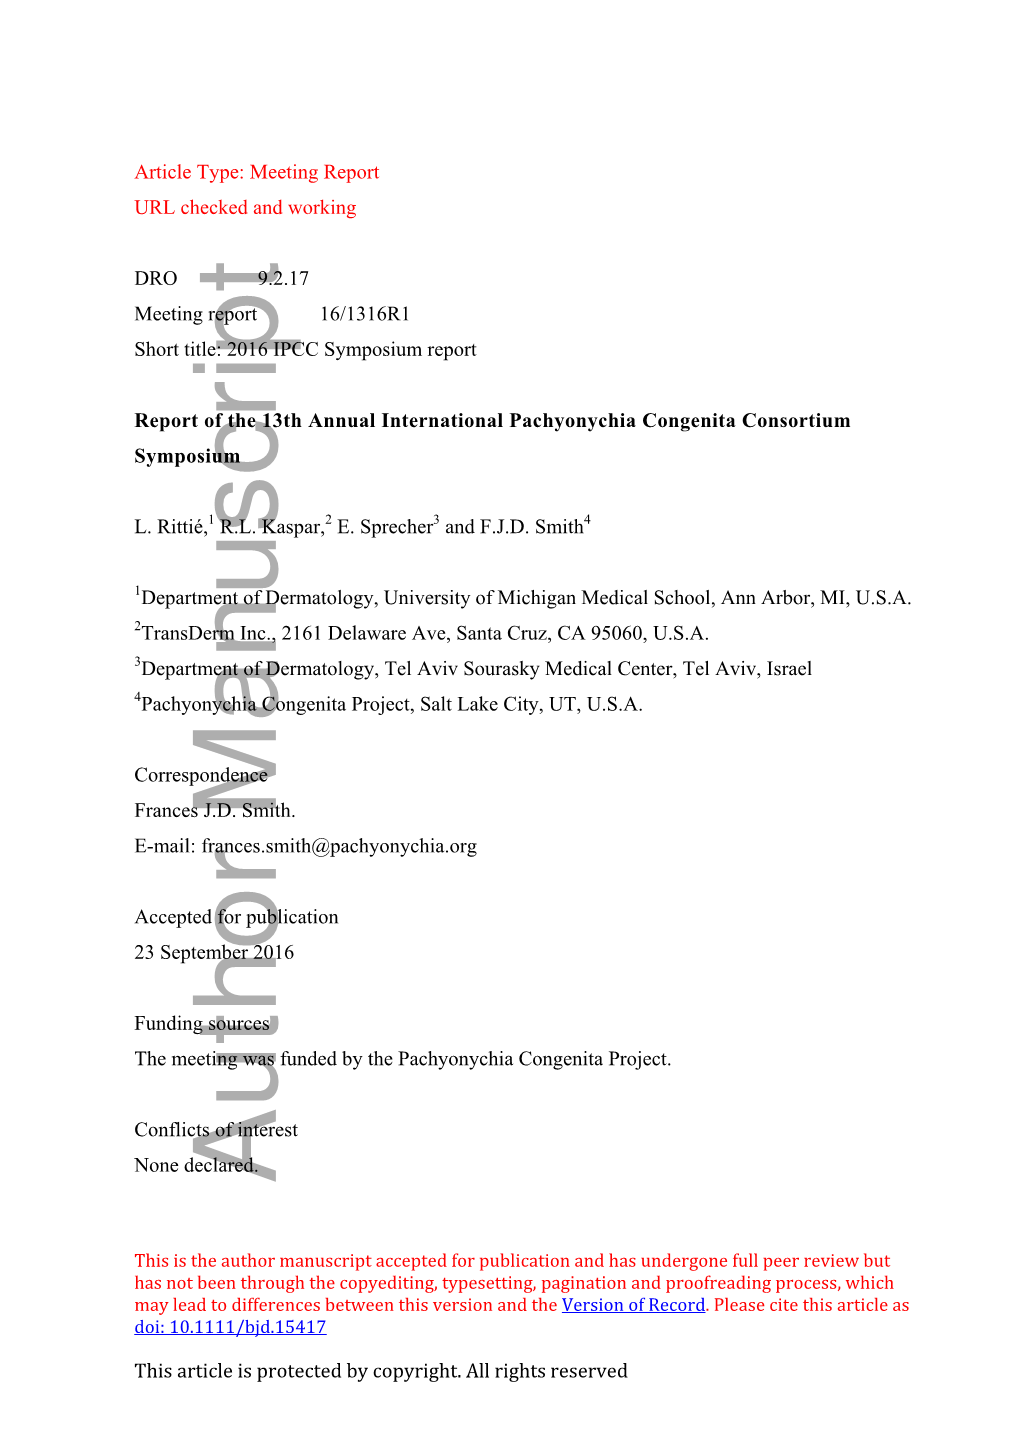 Report of the 13Th Annual International Pachyonychia Congenita Consortium Symposium